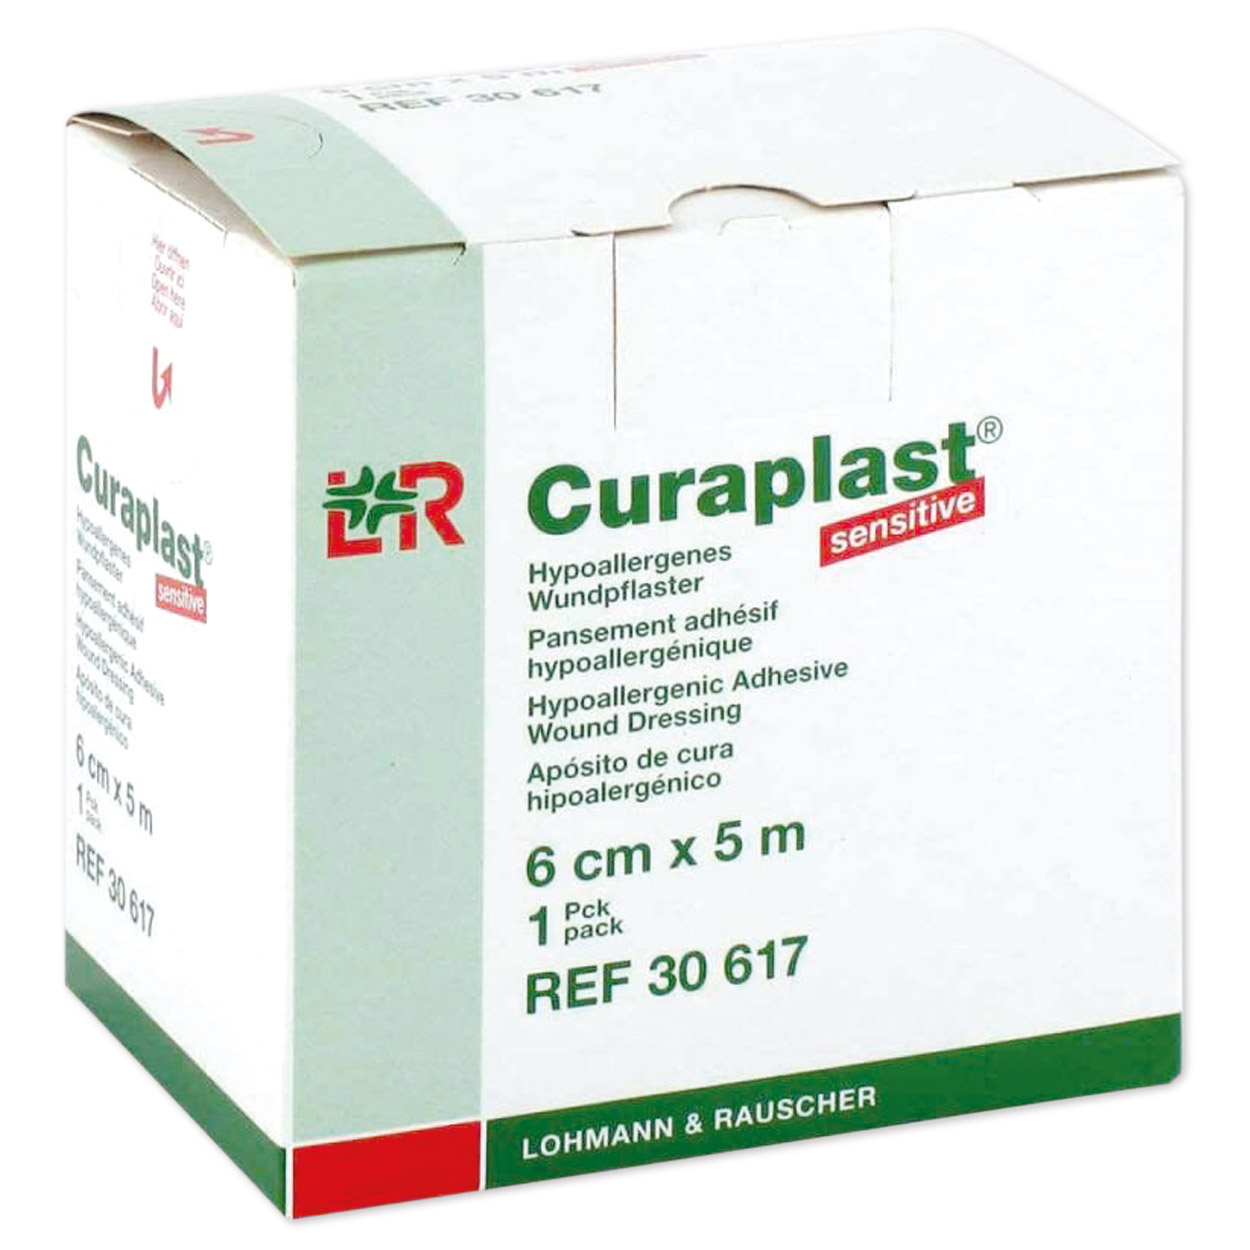 Curaplast® sensitive Wundpflaster 4 cm x 5 m